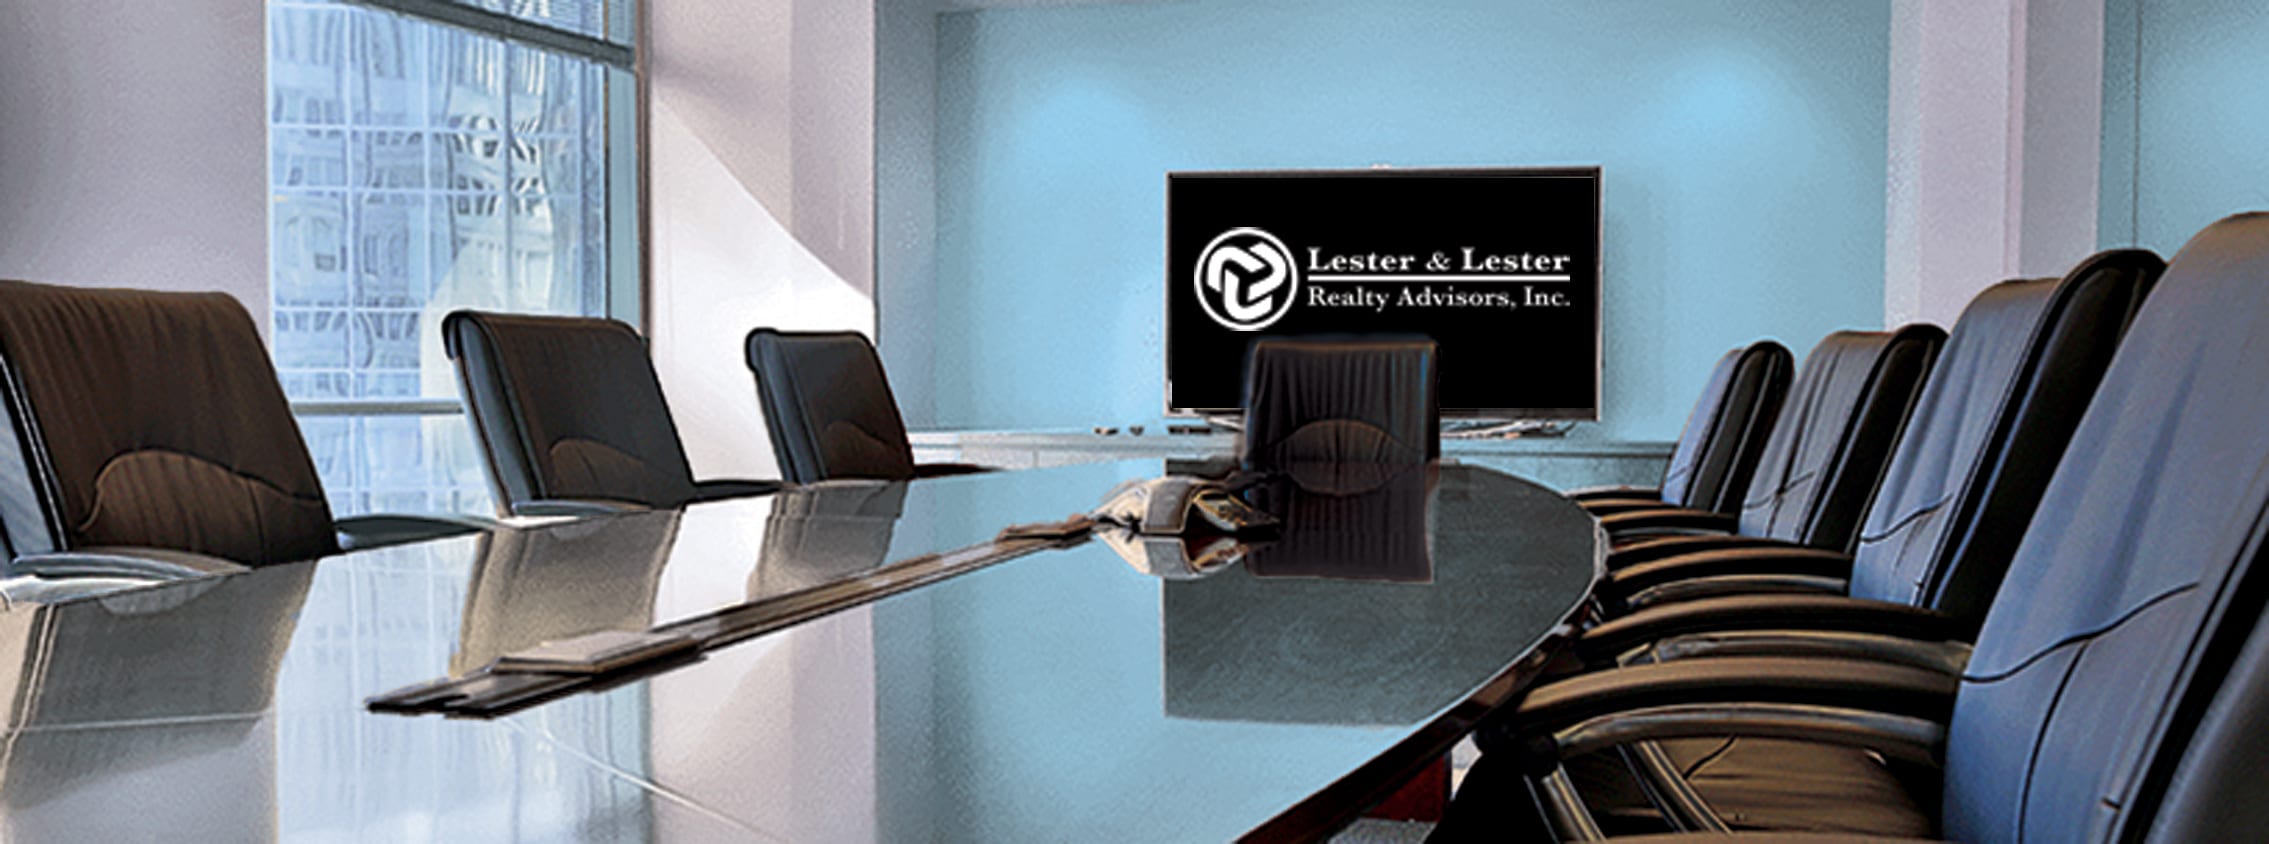 Lester & Lester boardroom